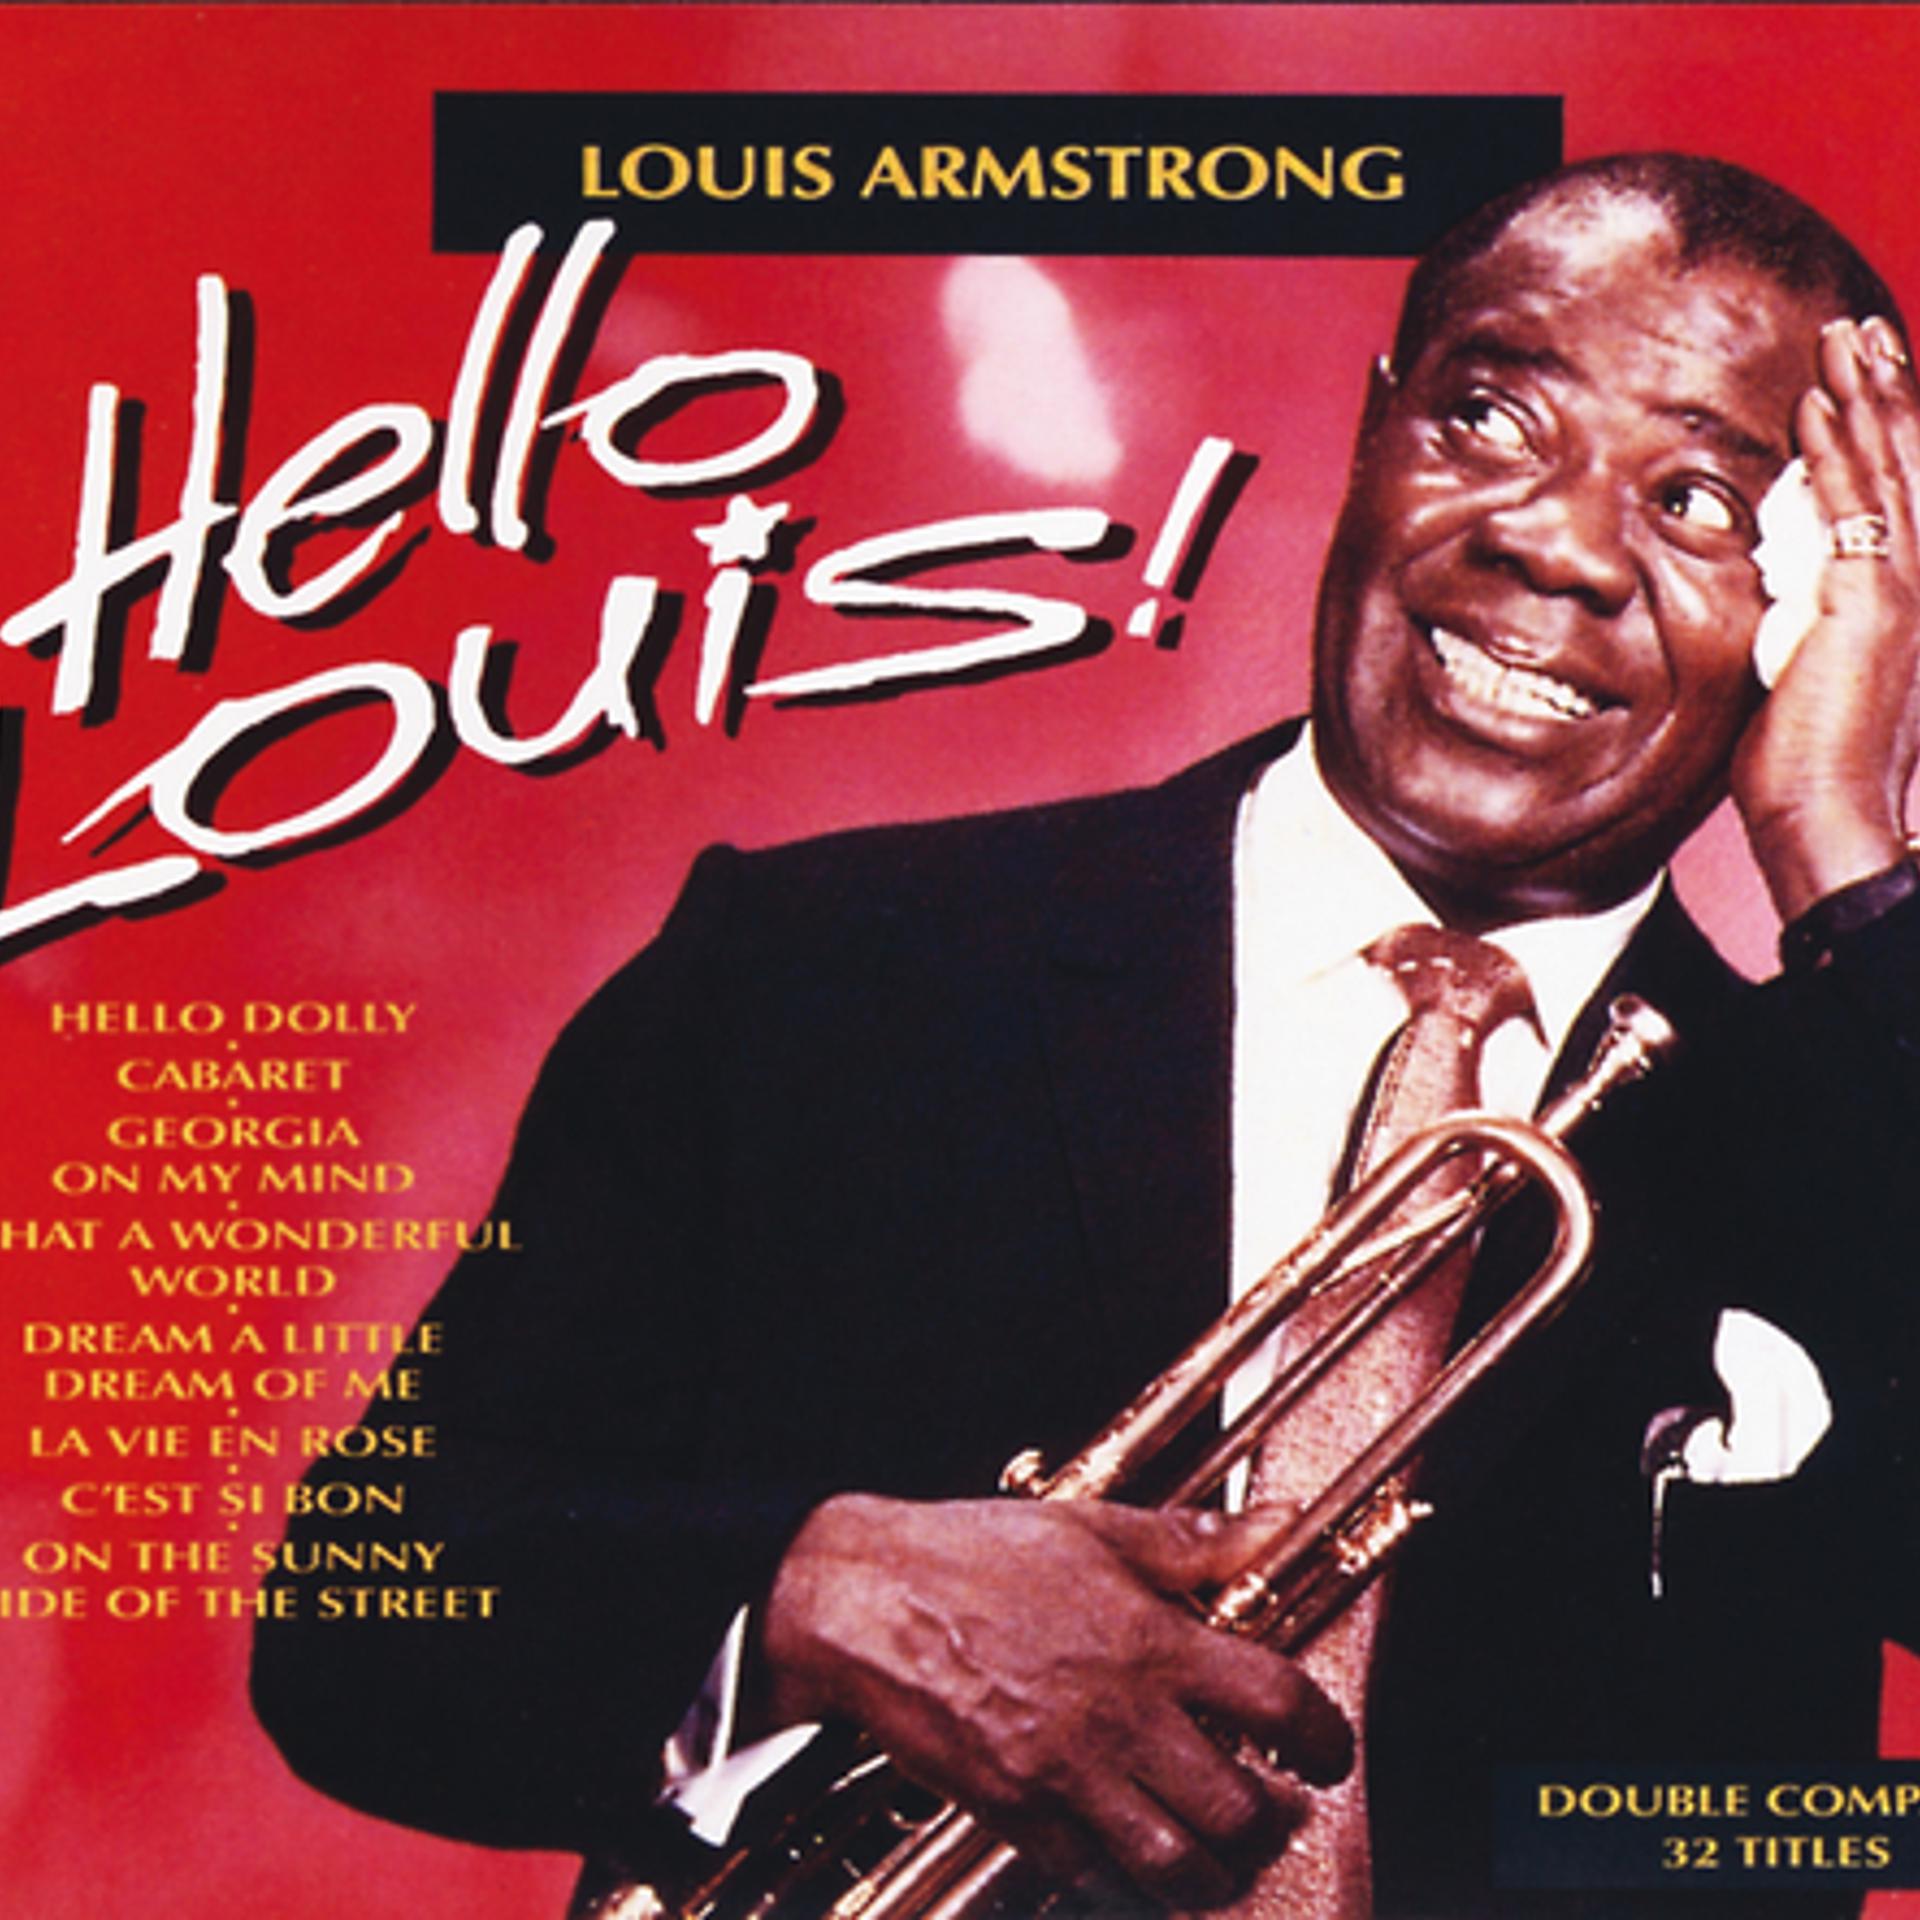 Постер к треку Louis Armstrong, The All Stars - Hello, Dolly!